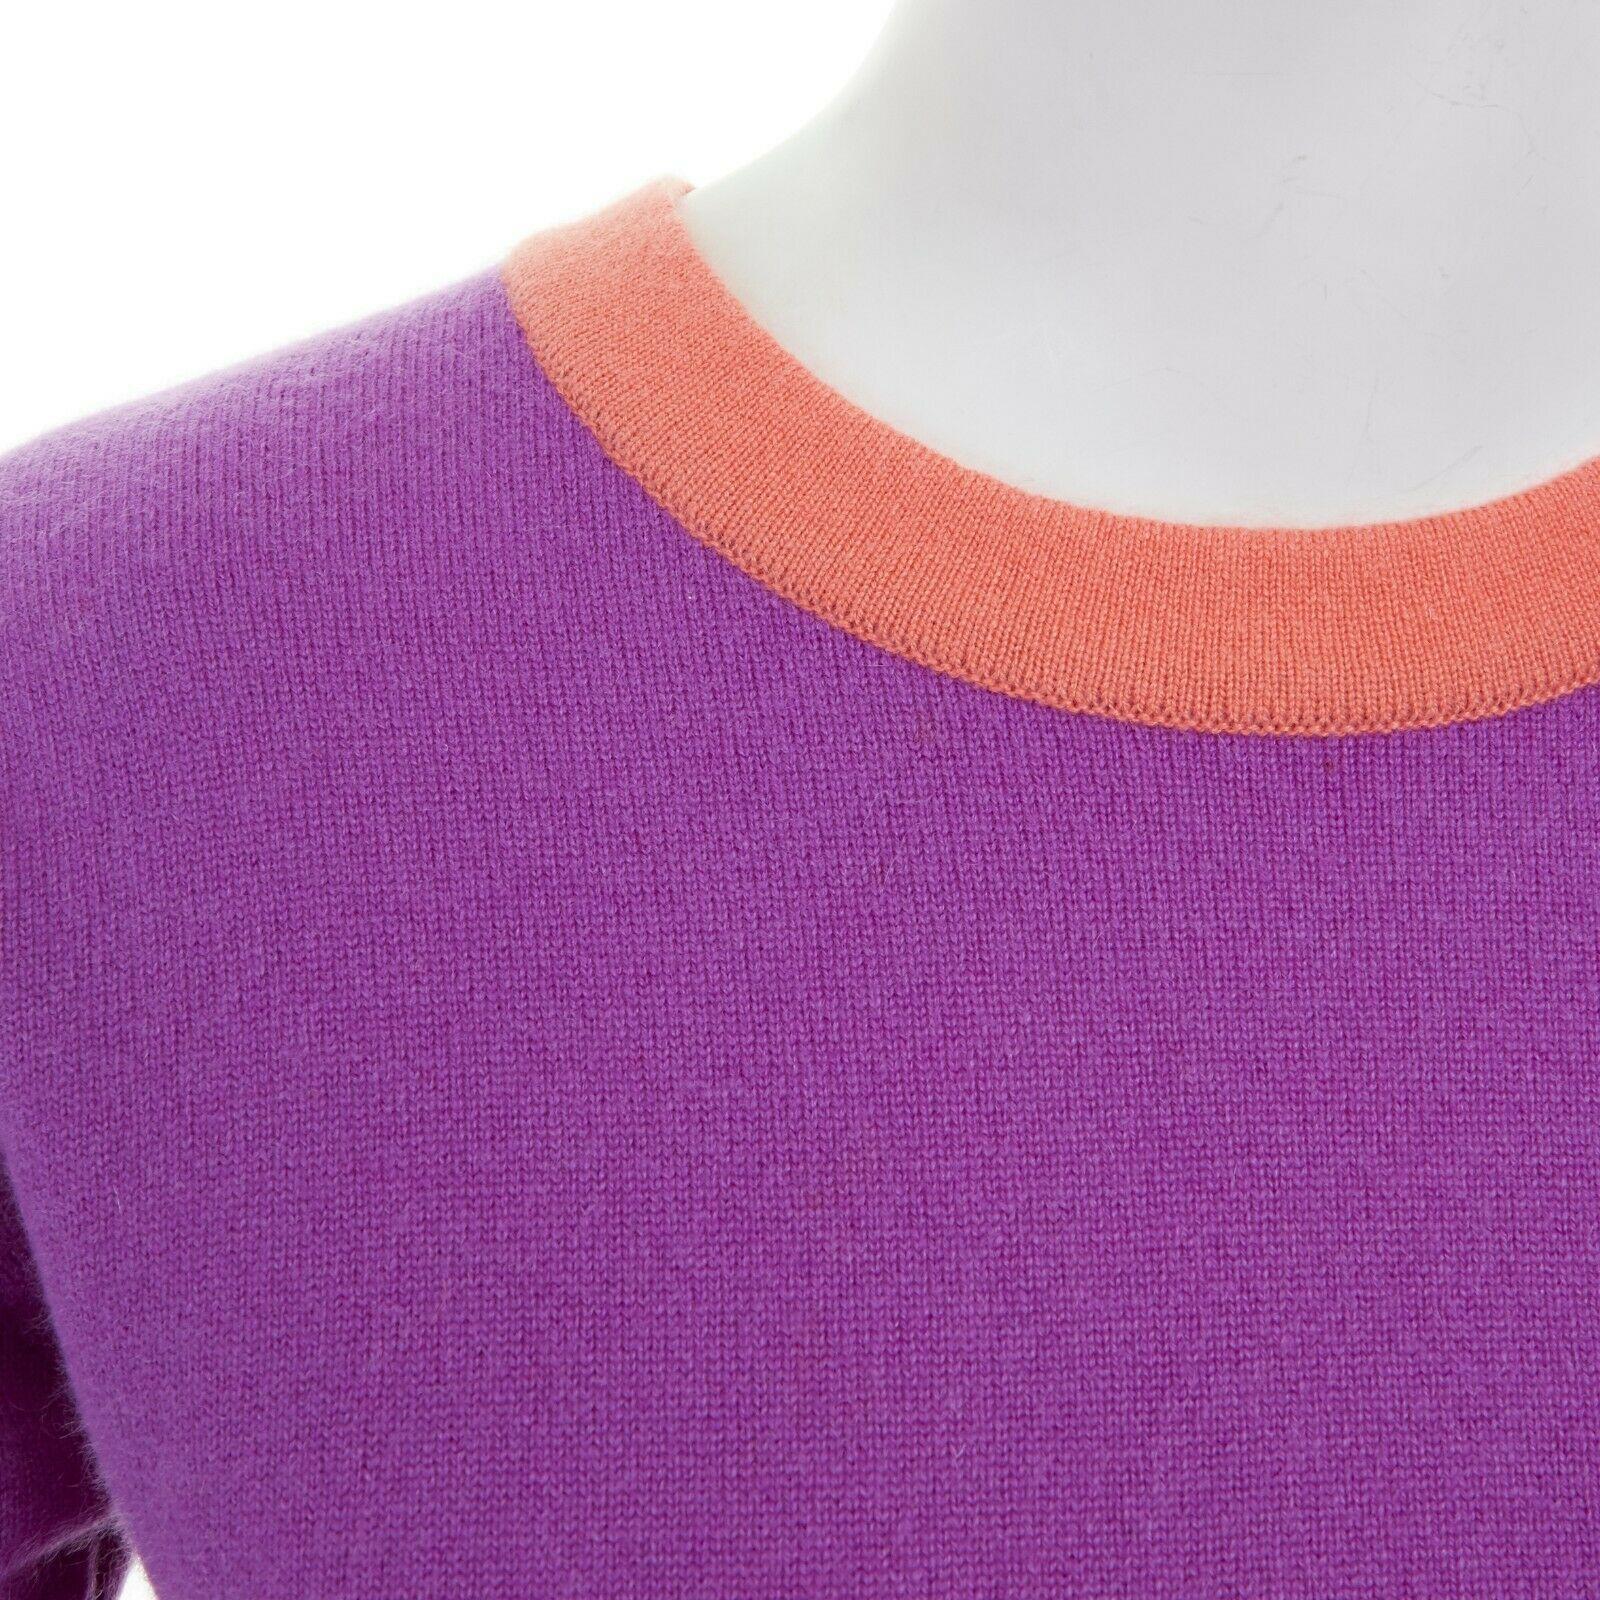 CHANEL 95A 100% cashmere purple pink trimmed neckline short sleeve sweater FR38 1